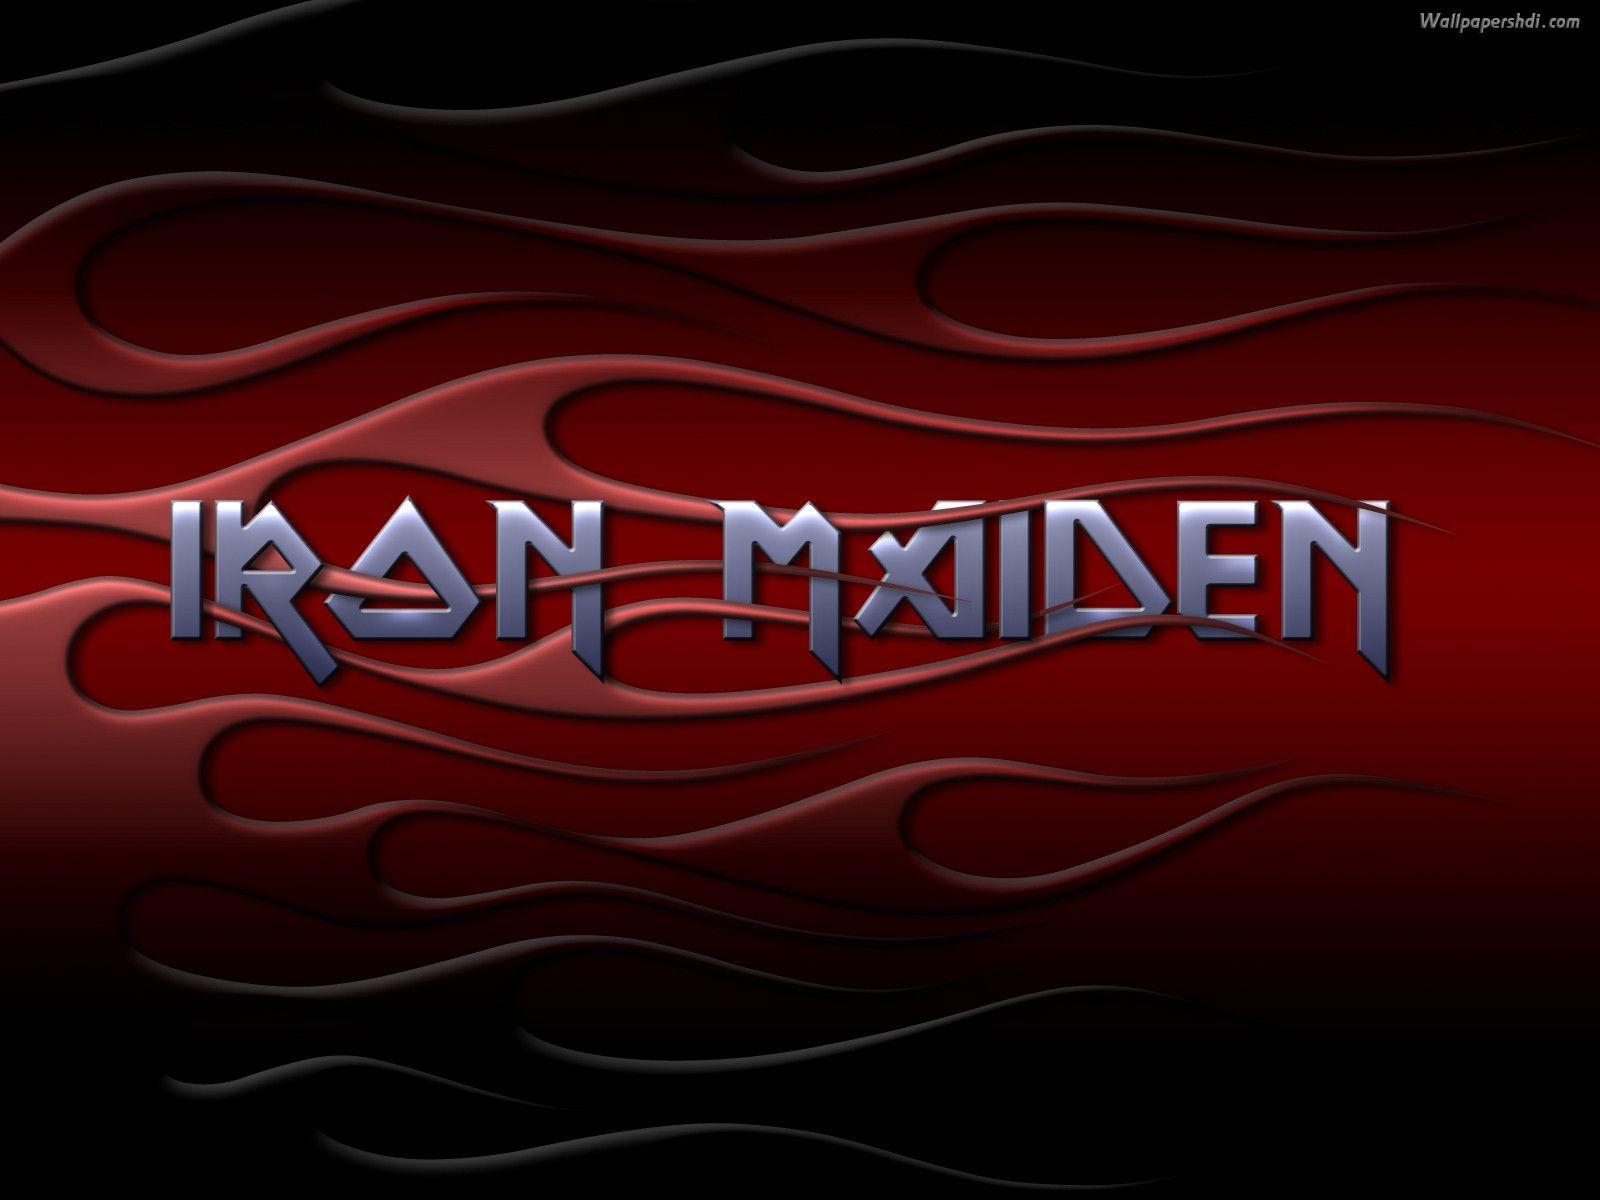 Iron Maiden wallpaper. Iron Maiden background